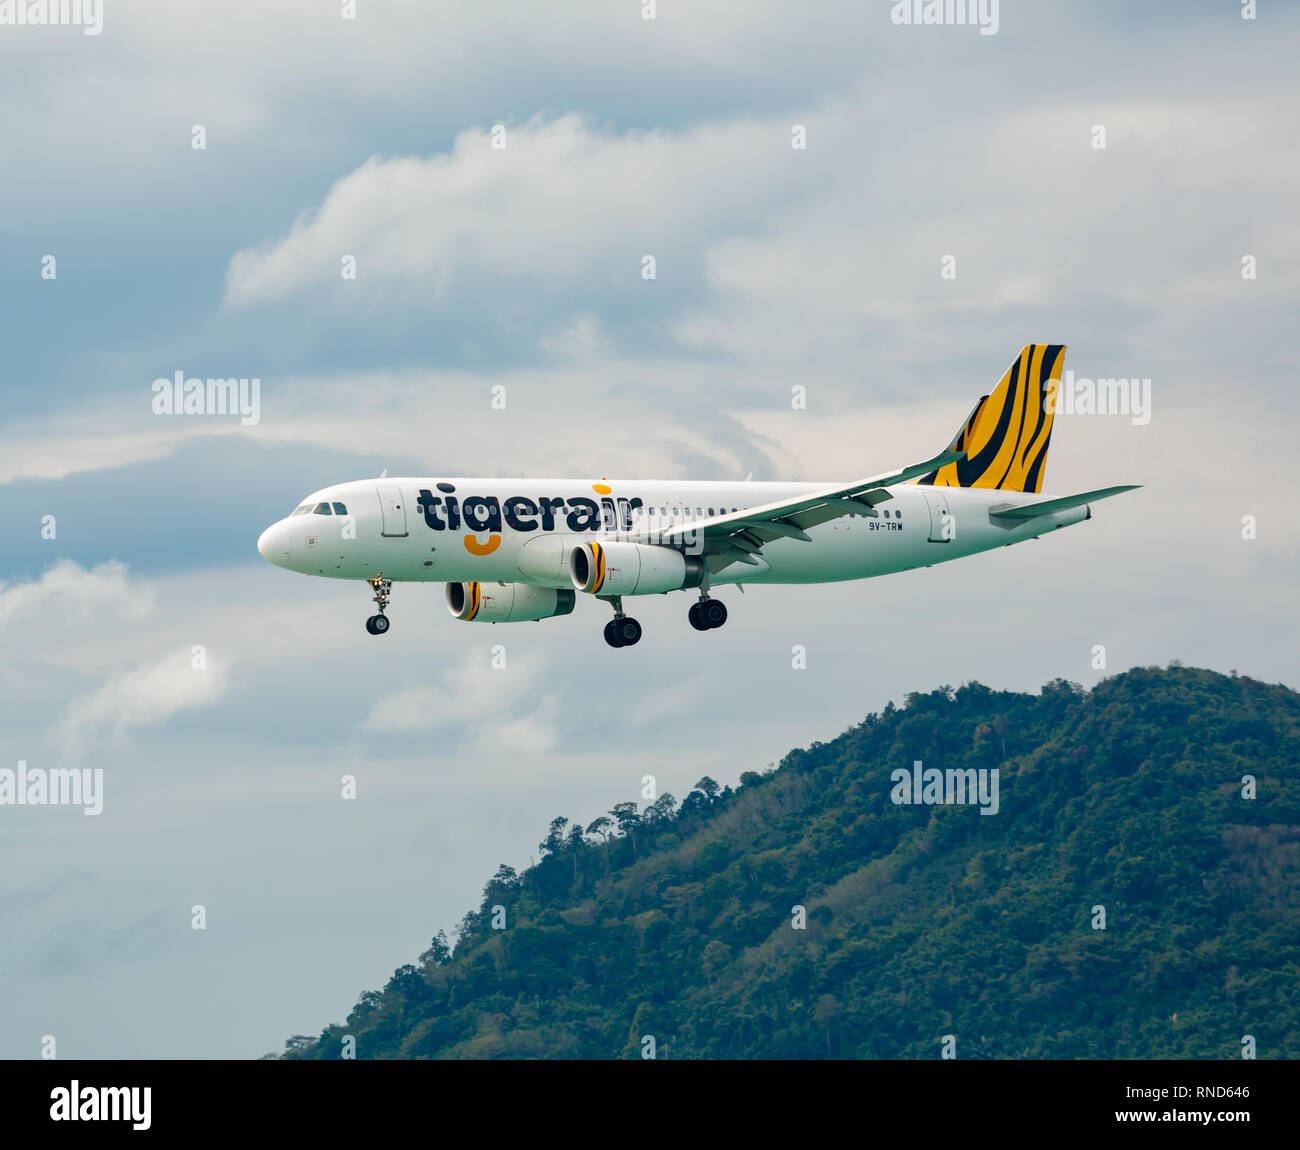 Airbus Tigeair landing approach Stock Photo